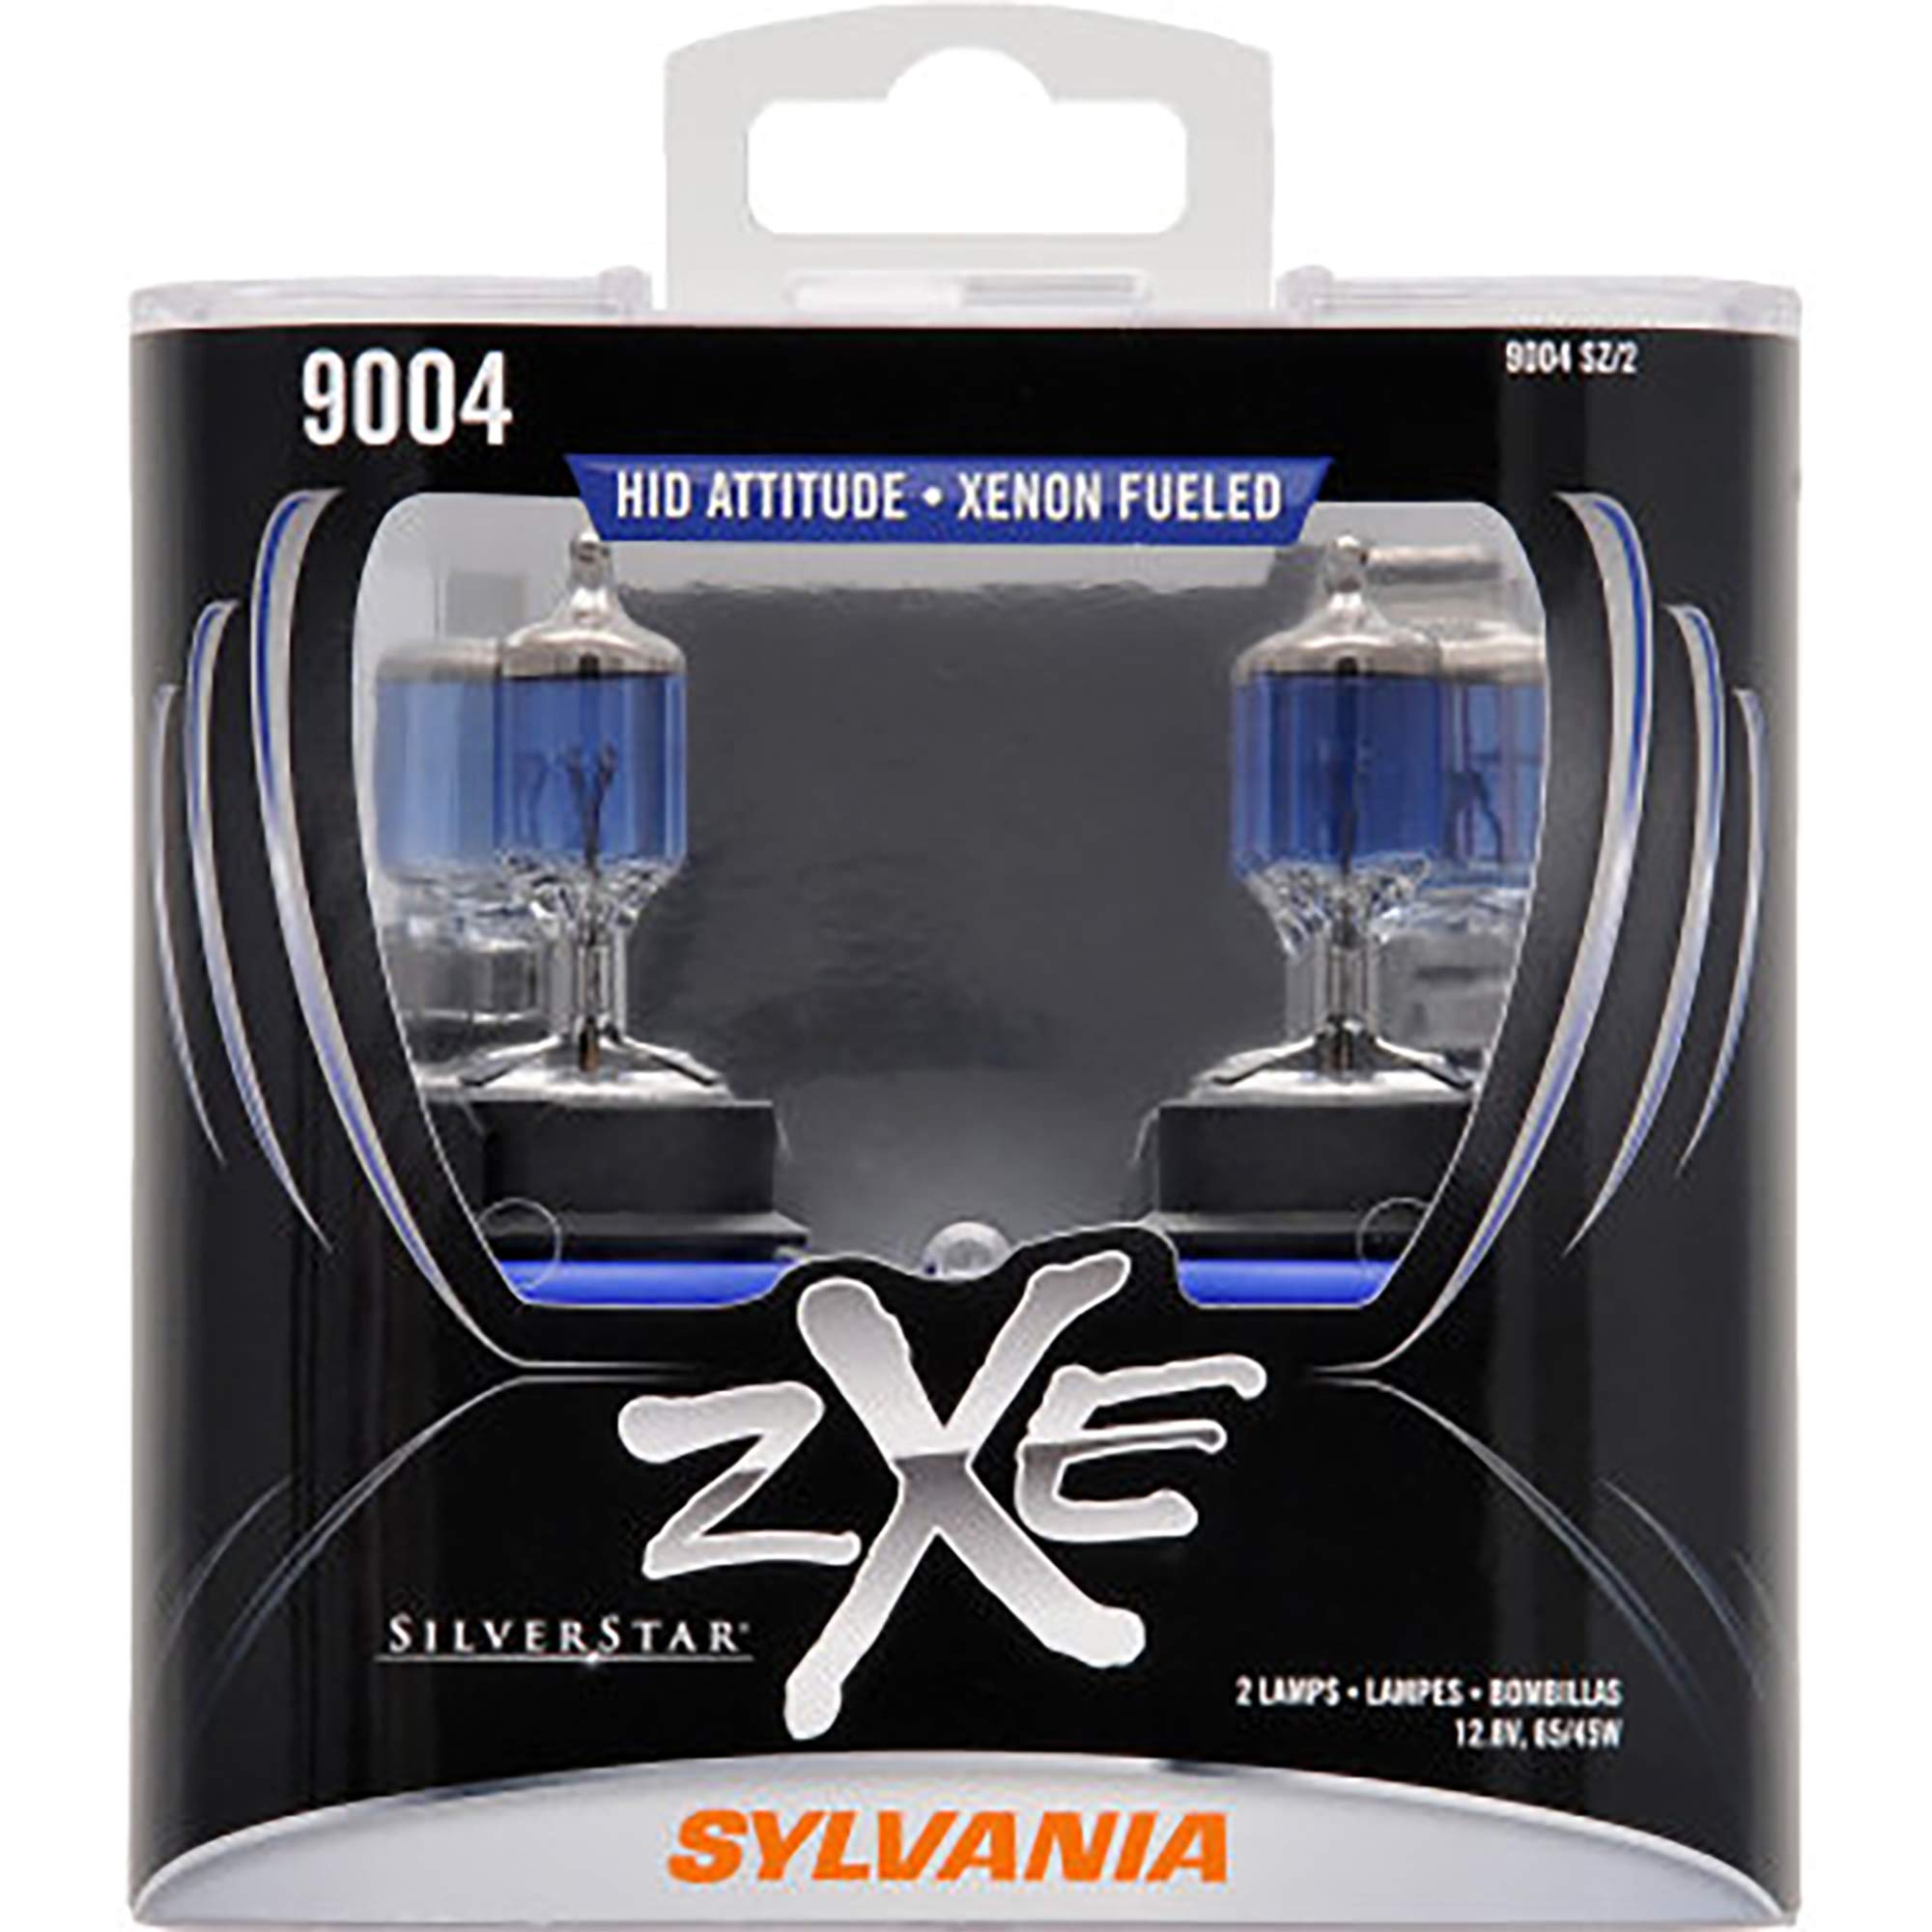 SYLVANIA 9004 SilverStar zXe High Performance Halogen Headlight Bulb - 2-PK